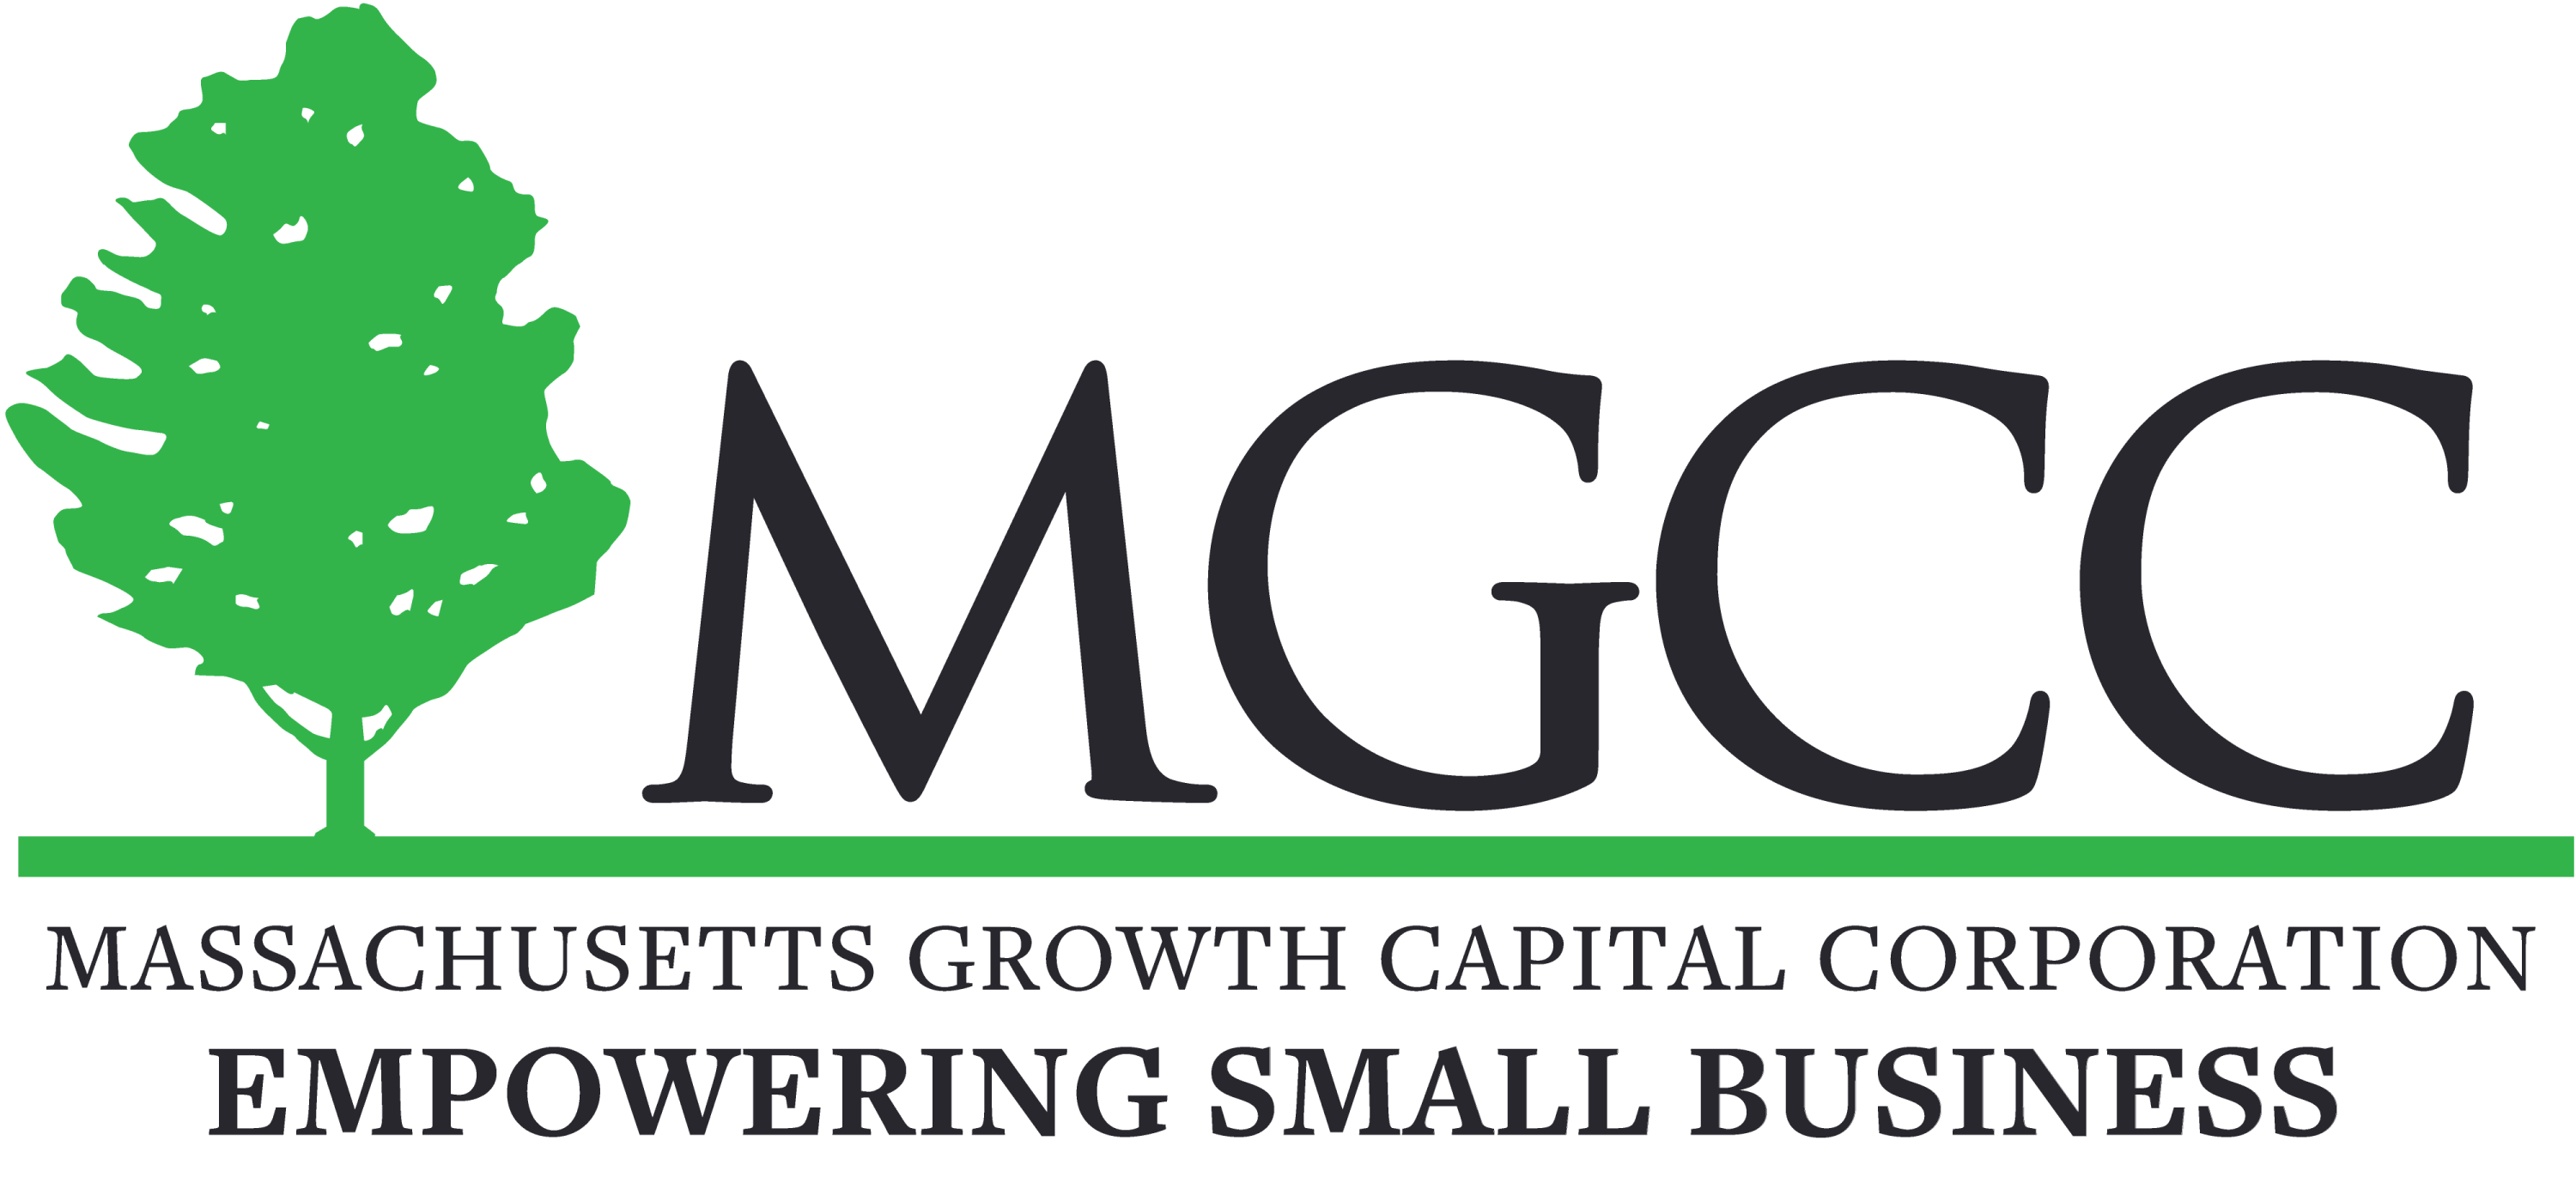 MGCC Logo